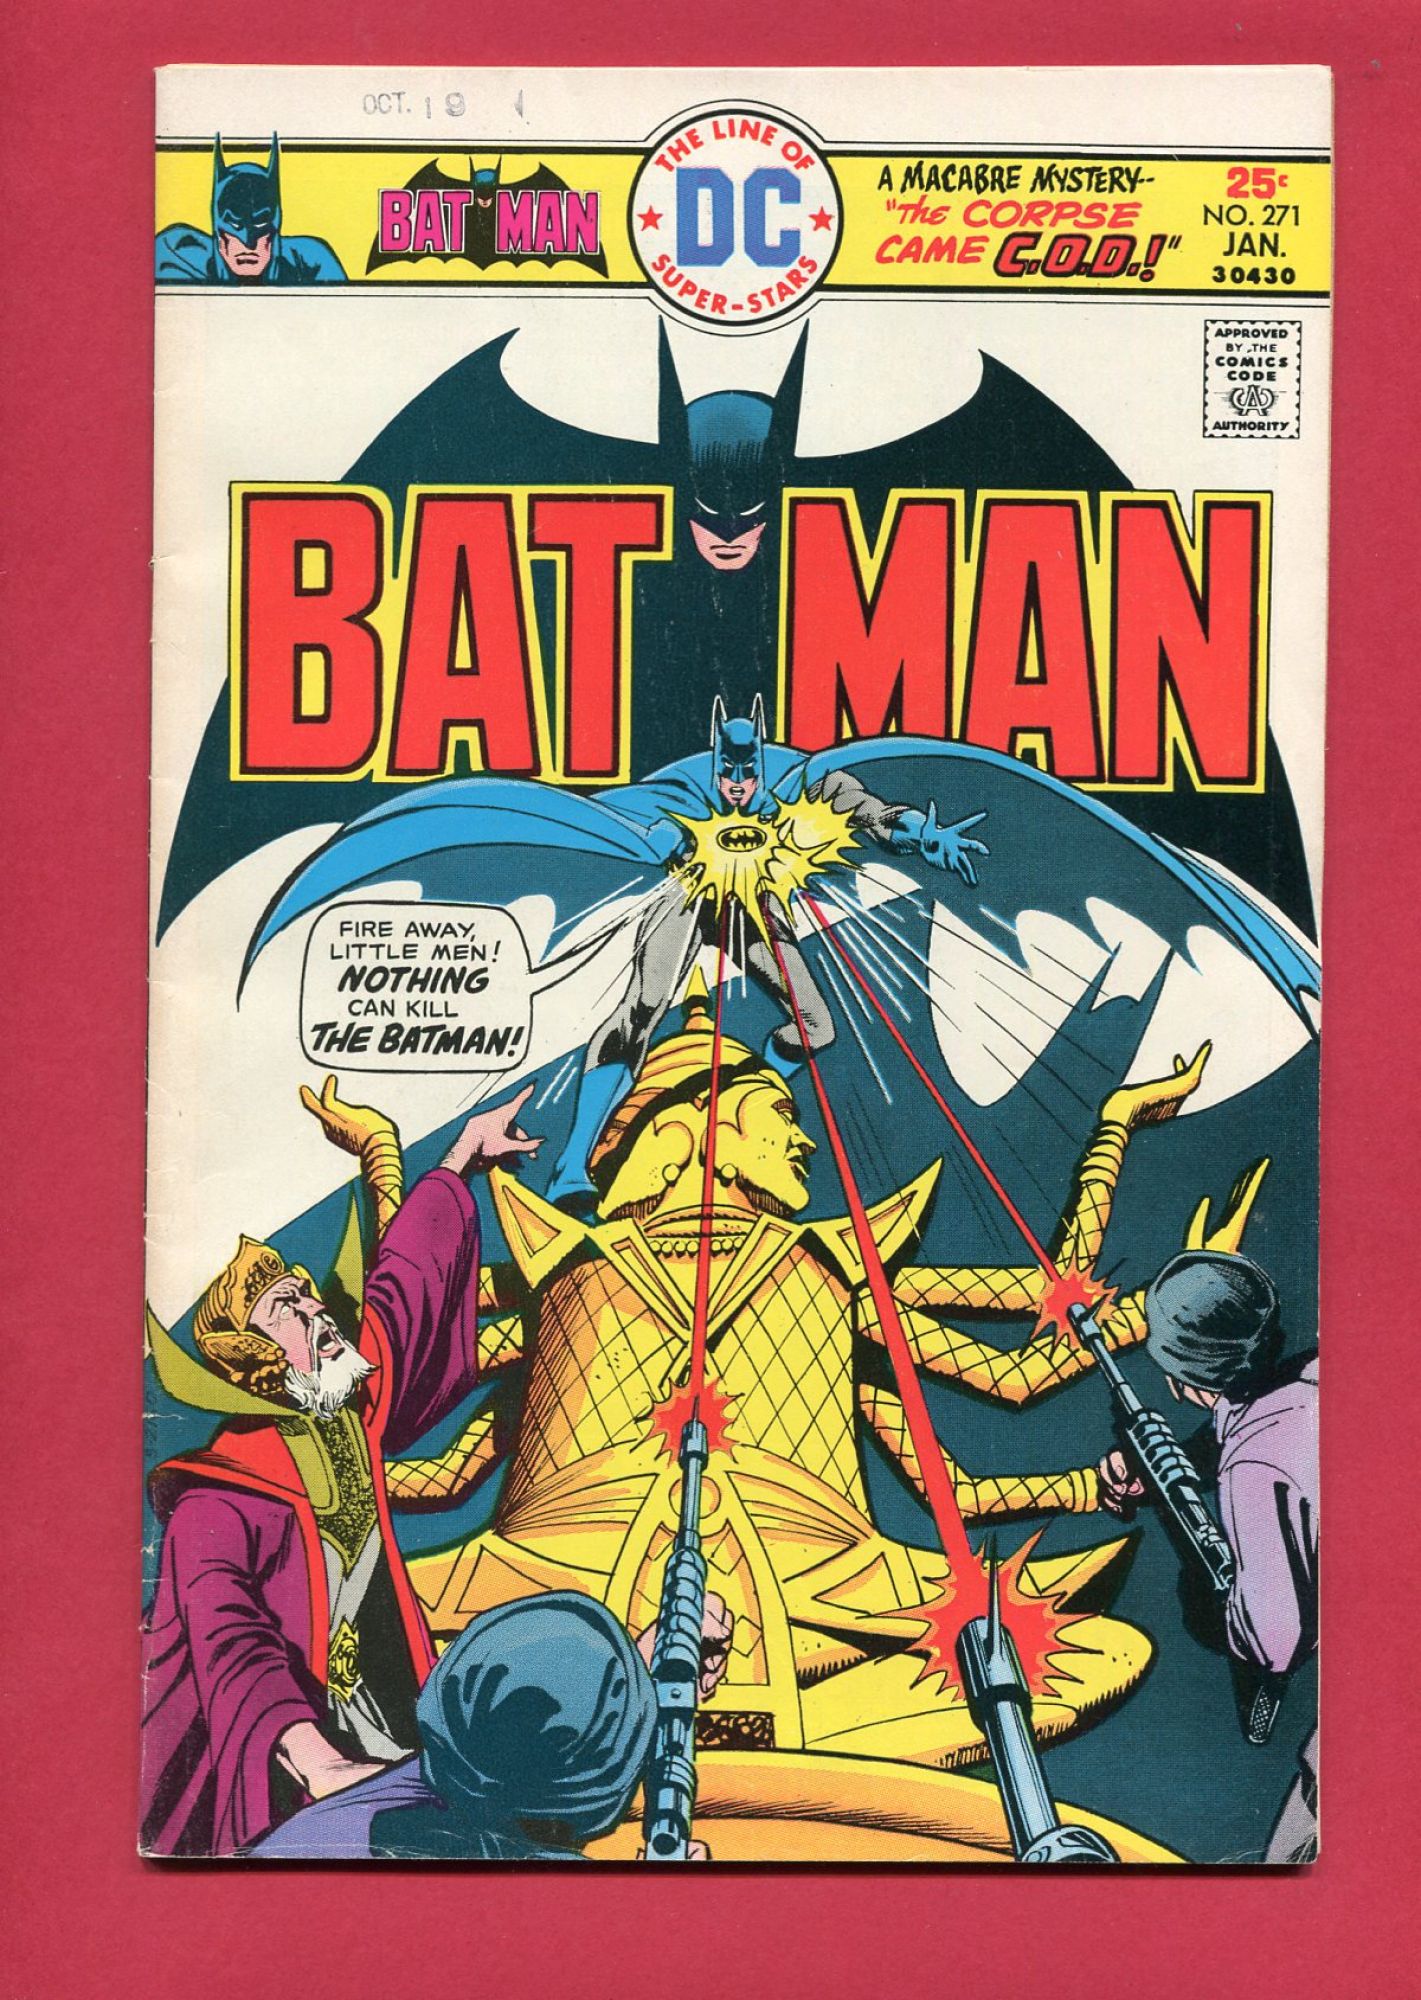 Batman #271, Jan 1976, 6.0 FN